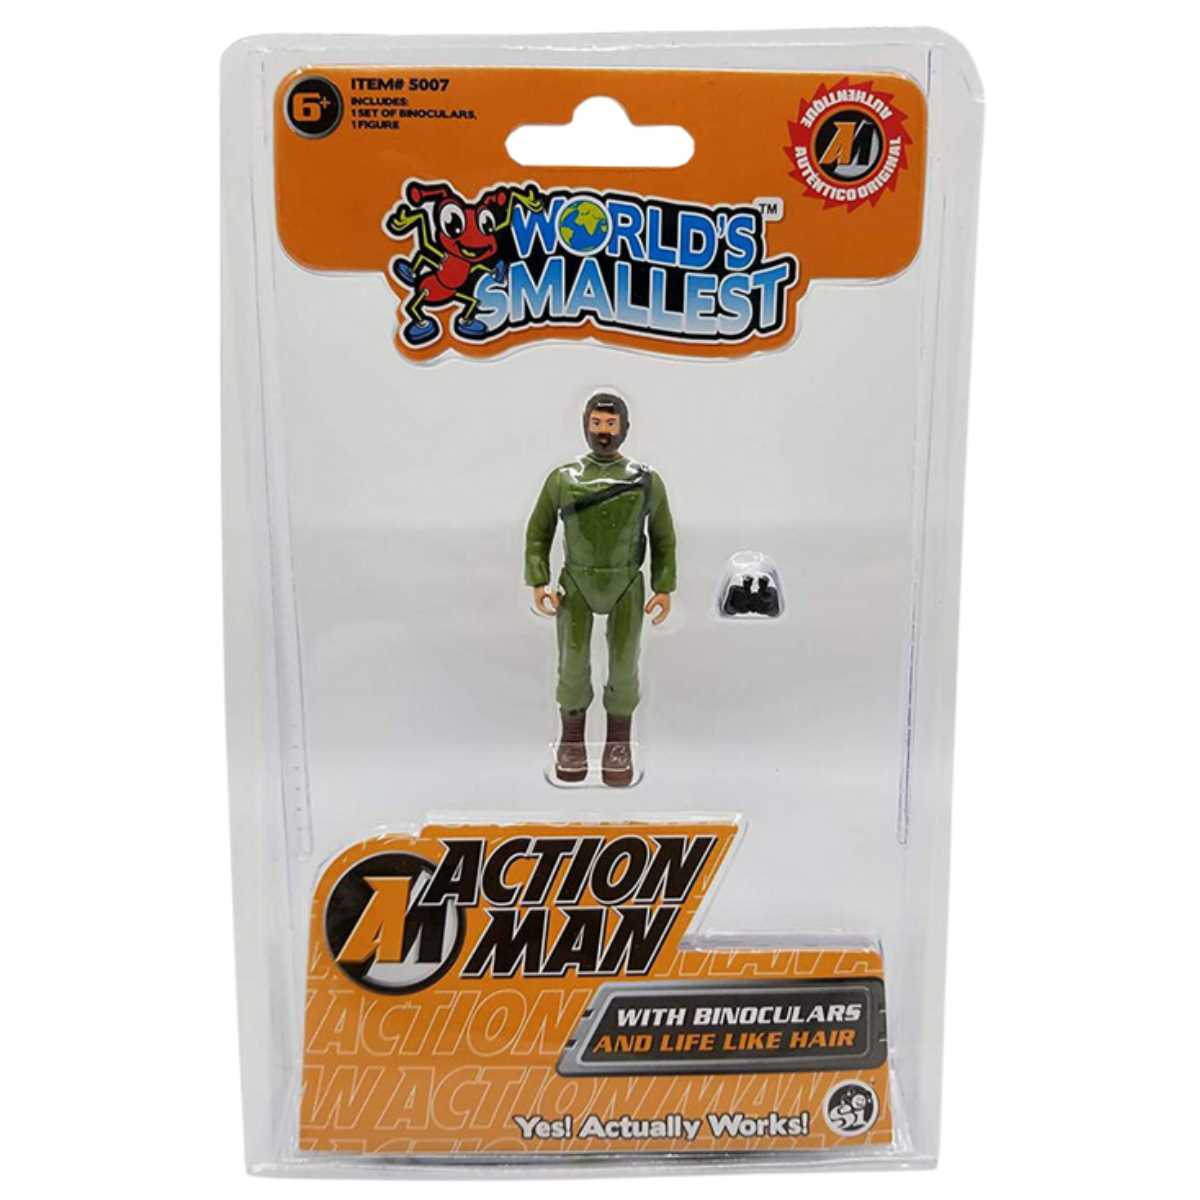 World's Smallest Action Man Toy - Retro Collectible - Simon's Collectibles